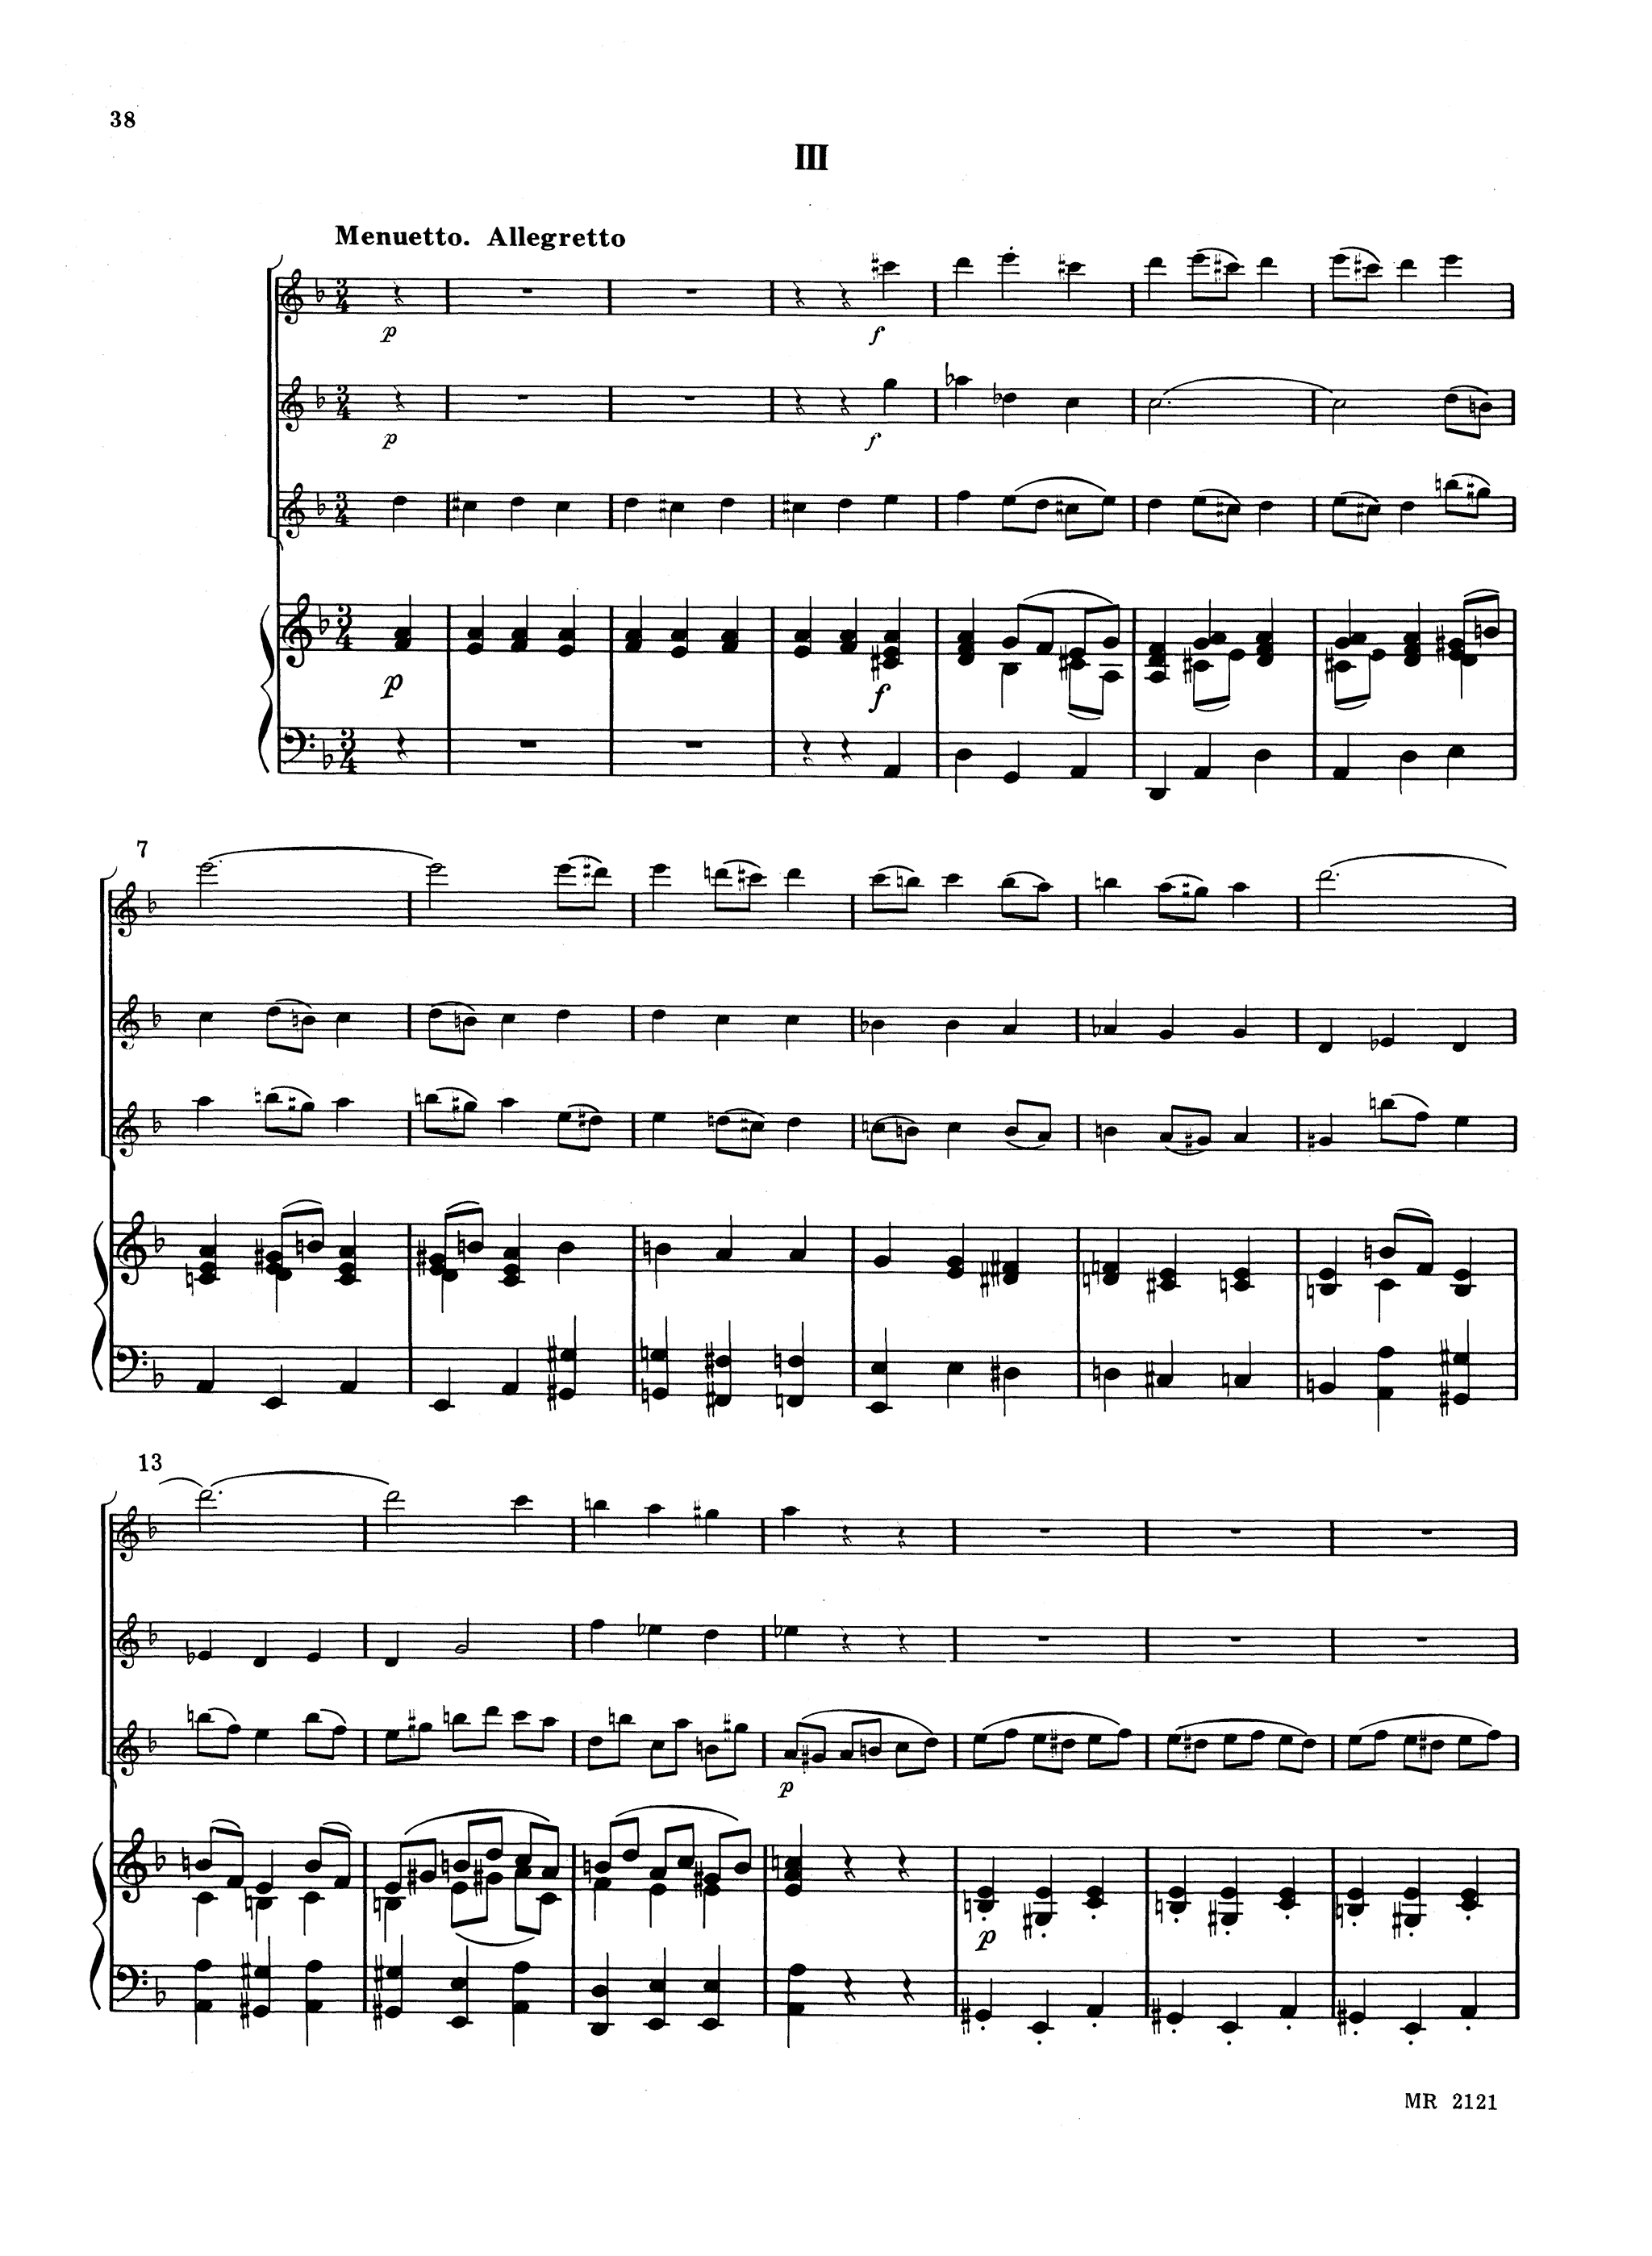 Sinfonia Concertante, Op. 80 - Movement 3